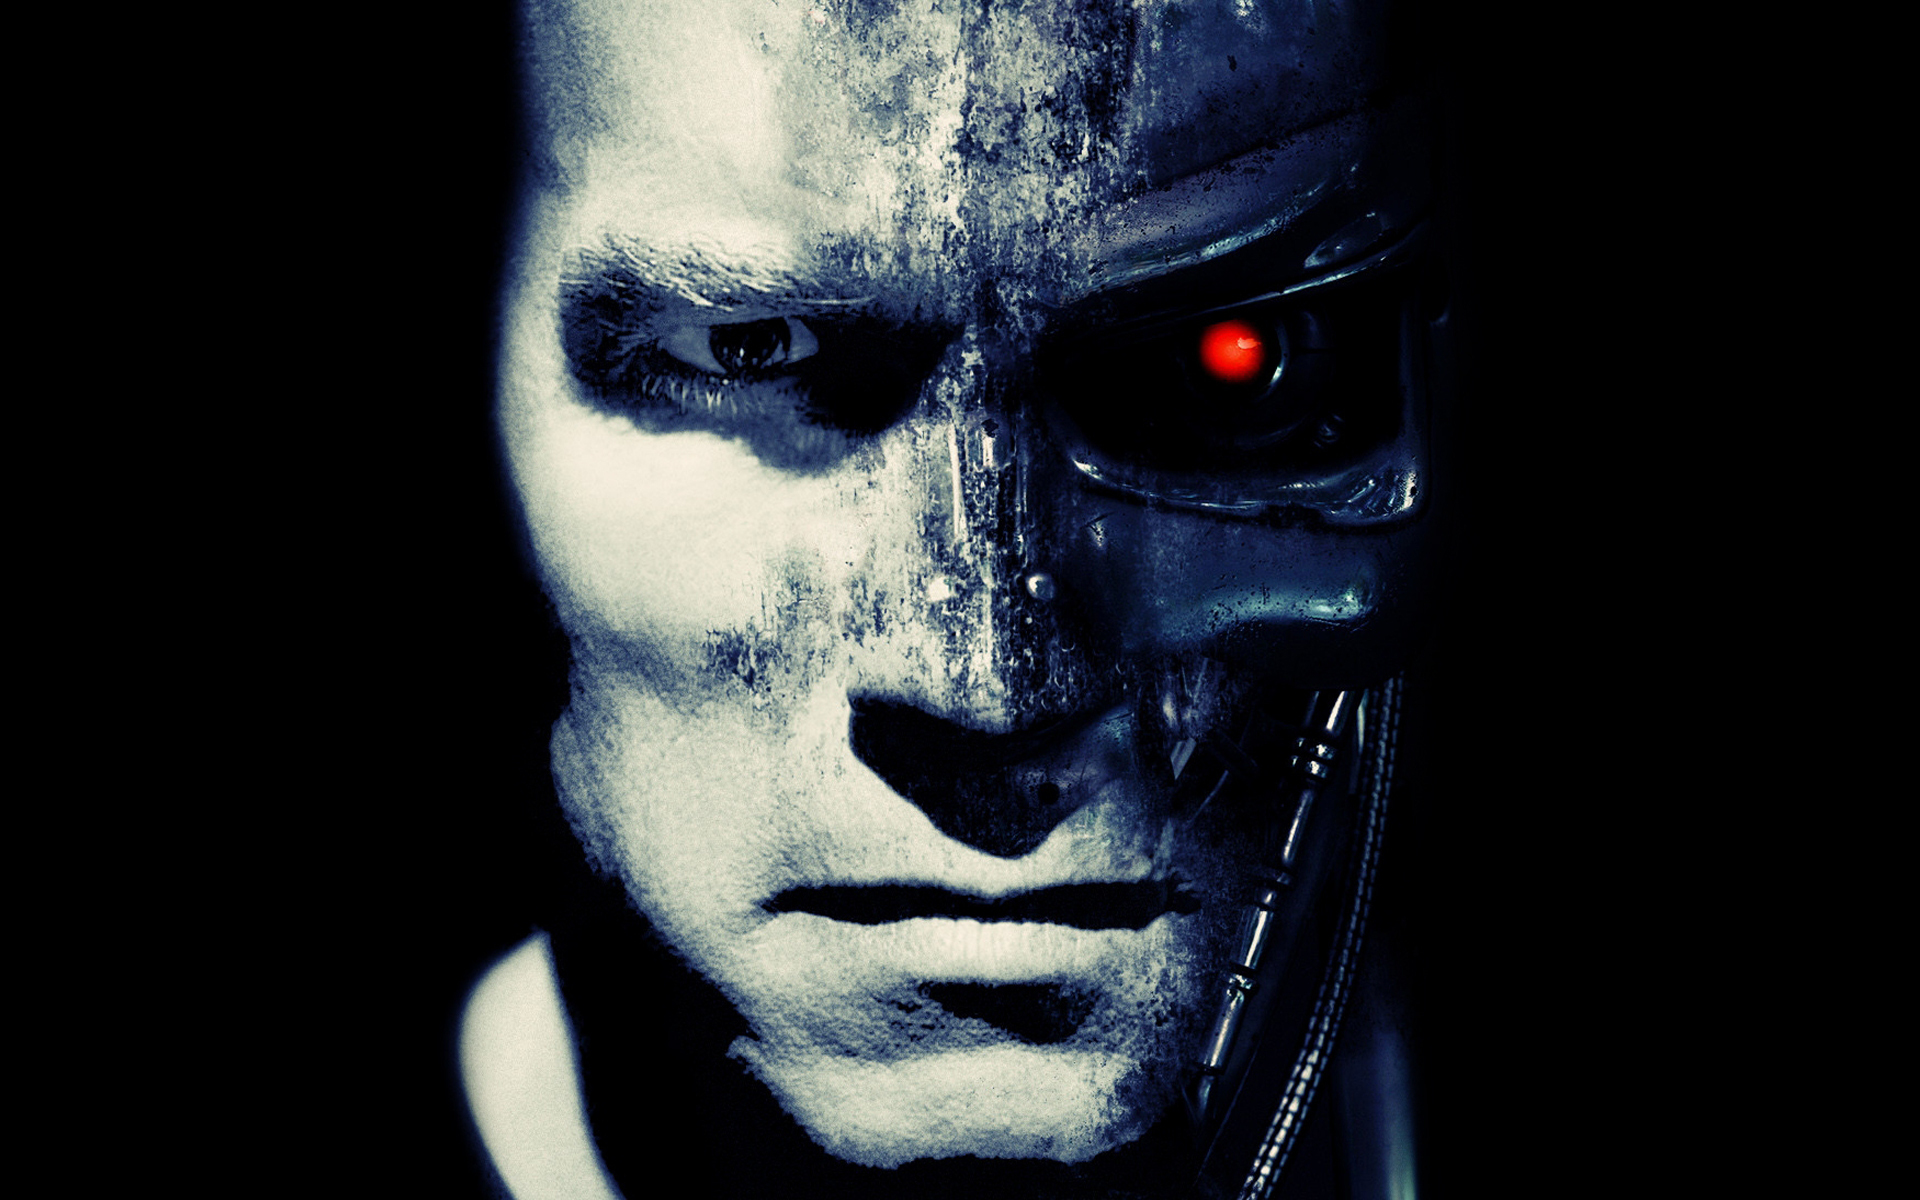  Cyborg HQ Background Images